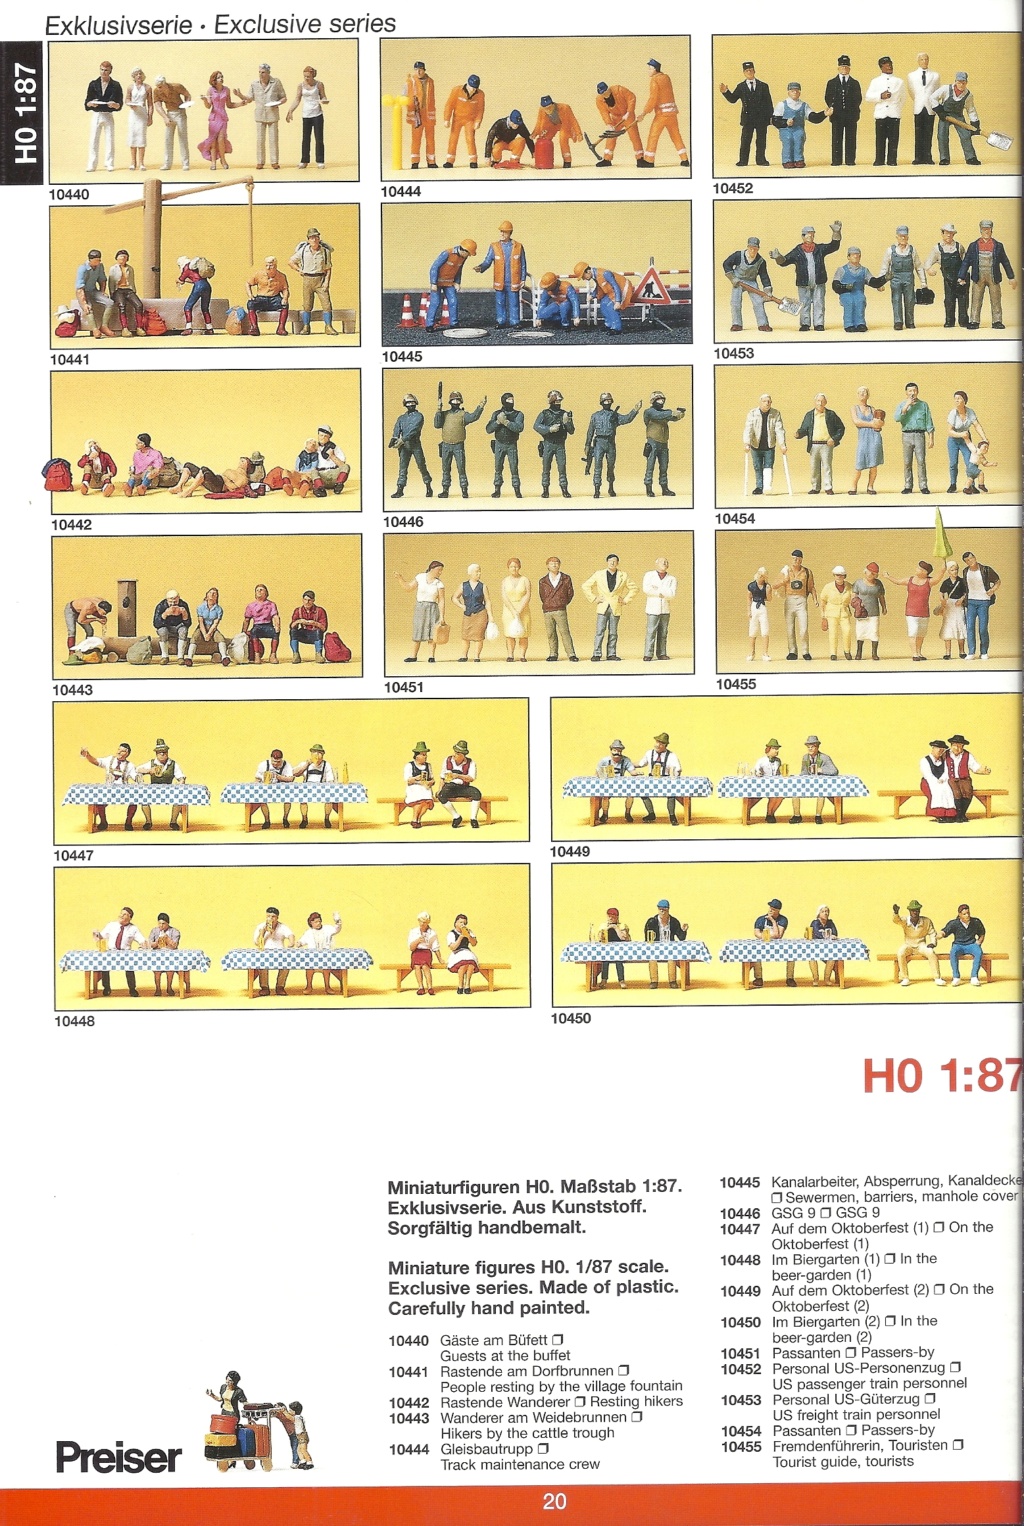 [PREISER 2007] Catalogue PK 24 2007 Preis658